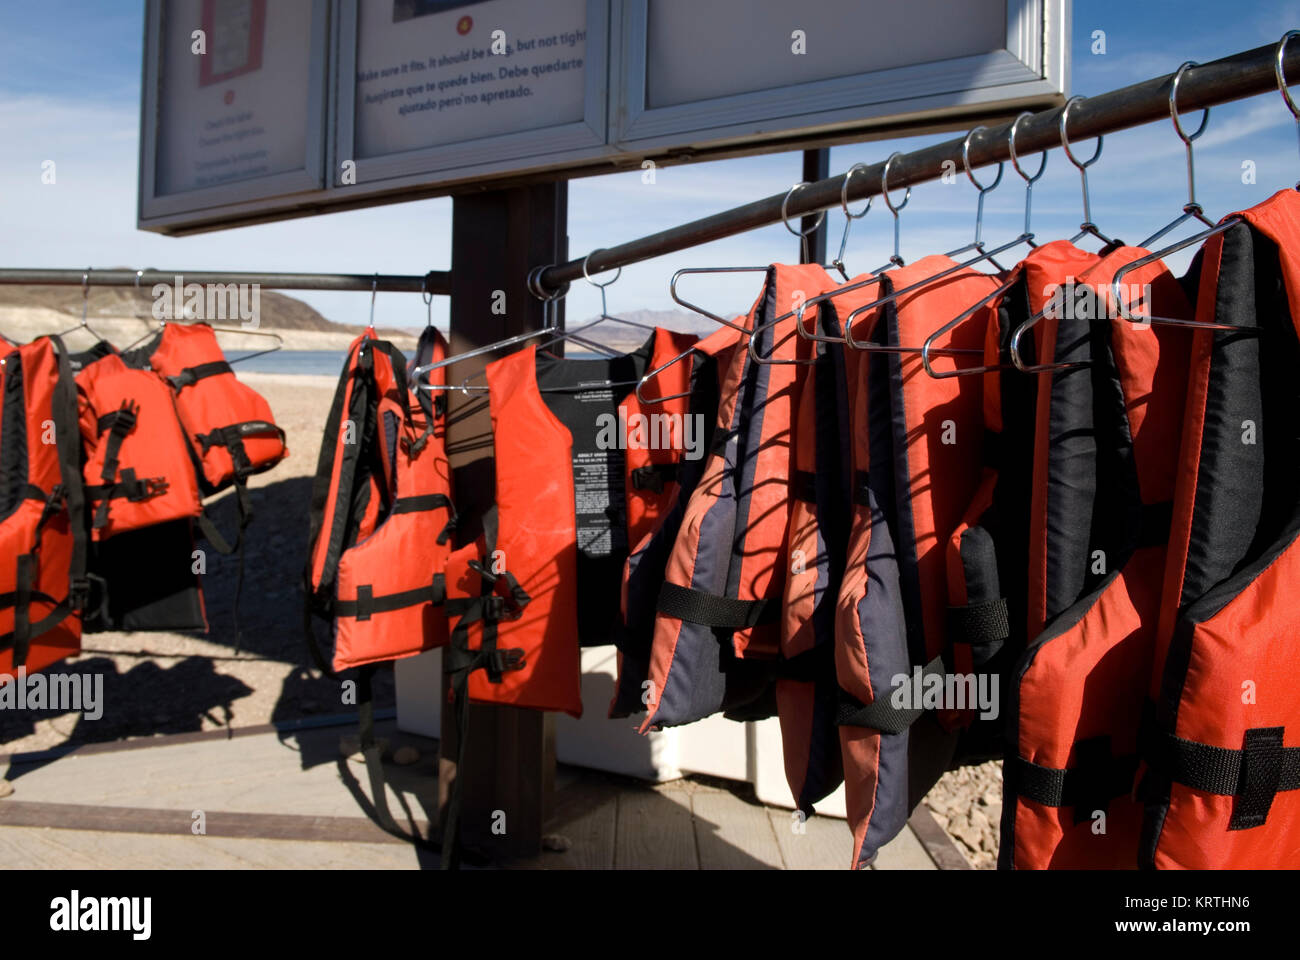 Life jacket loaner station at Lake Mead National Recreation Area Nevada, USA. Stock Photo